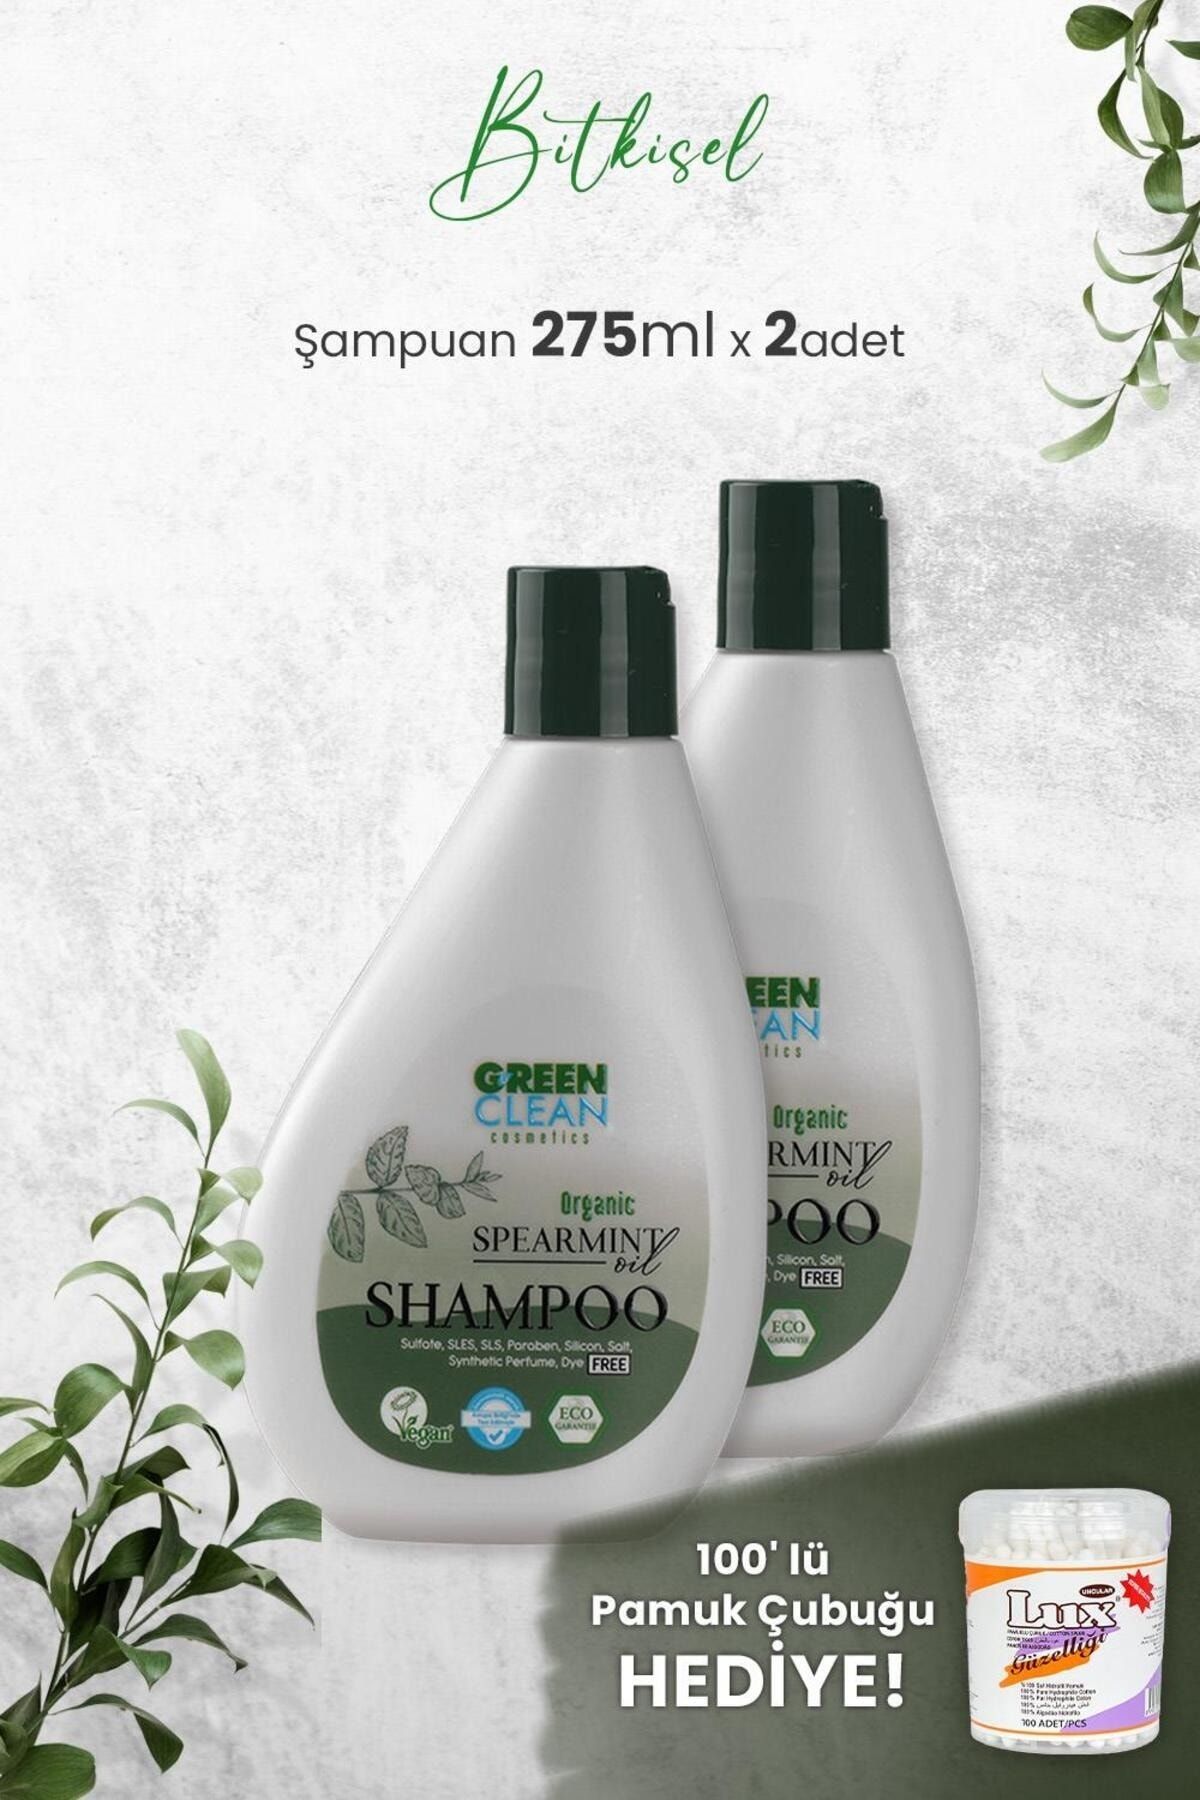 Green Clean Şampuan Spearmint 275 ml x 2 Adet ve Hediyeli